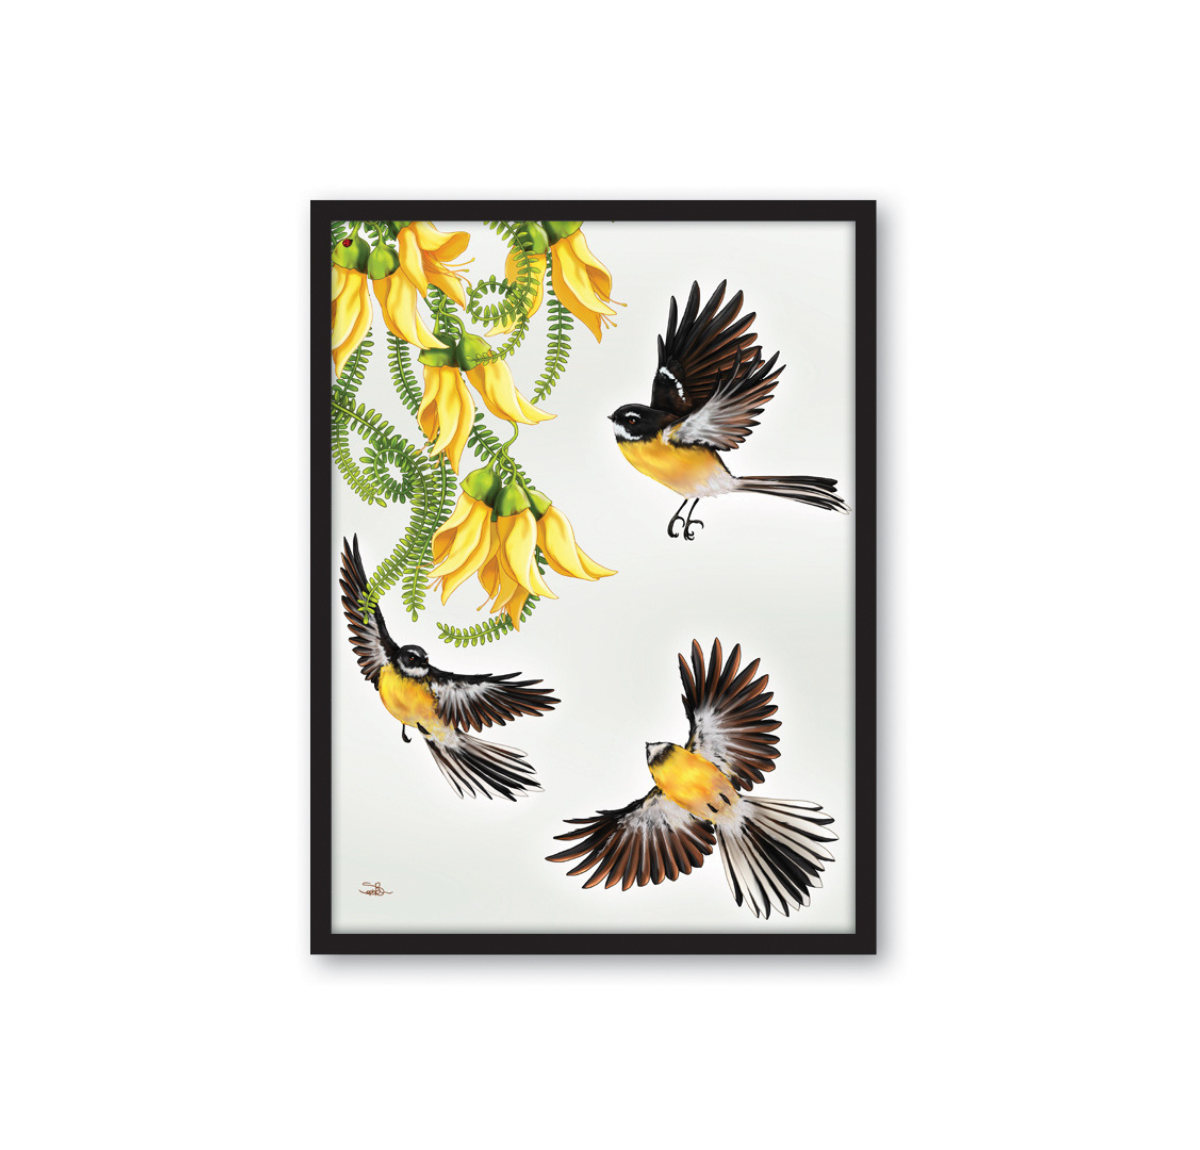 Fantail In Flight Framed Canvas Wall Art Print - Small